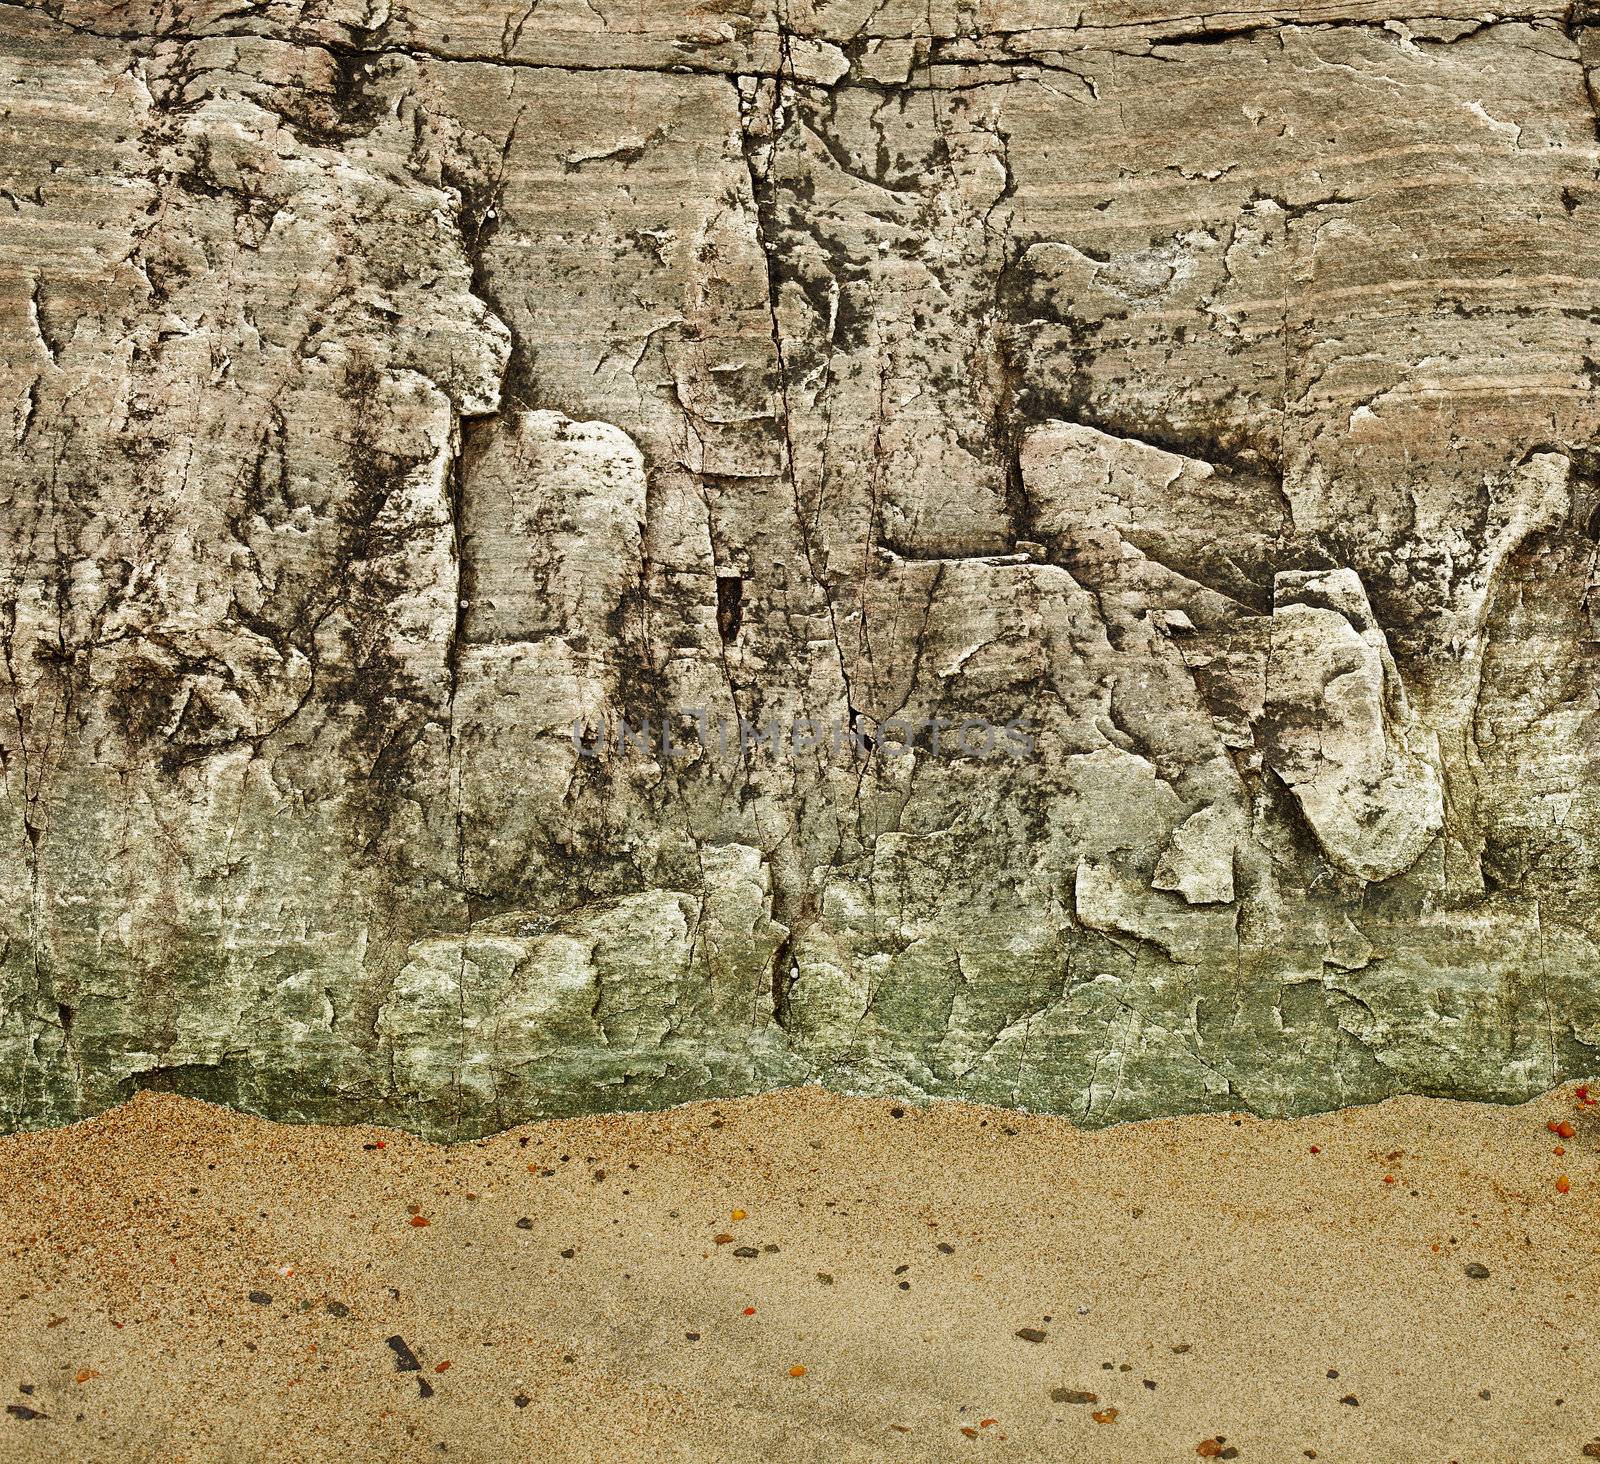 Granite rock on a sandy beach by pzaxe